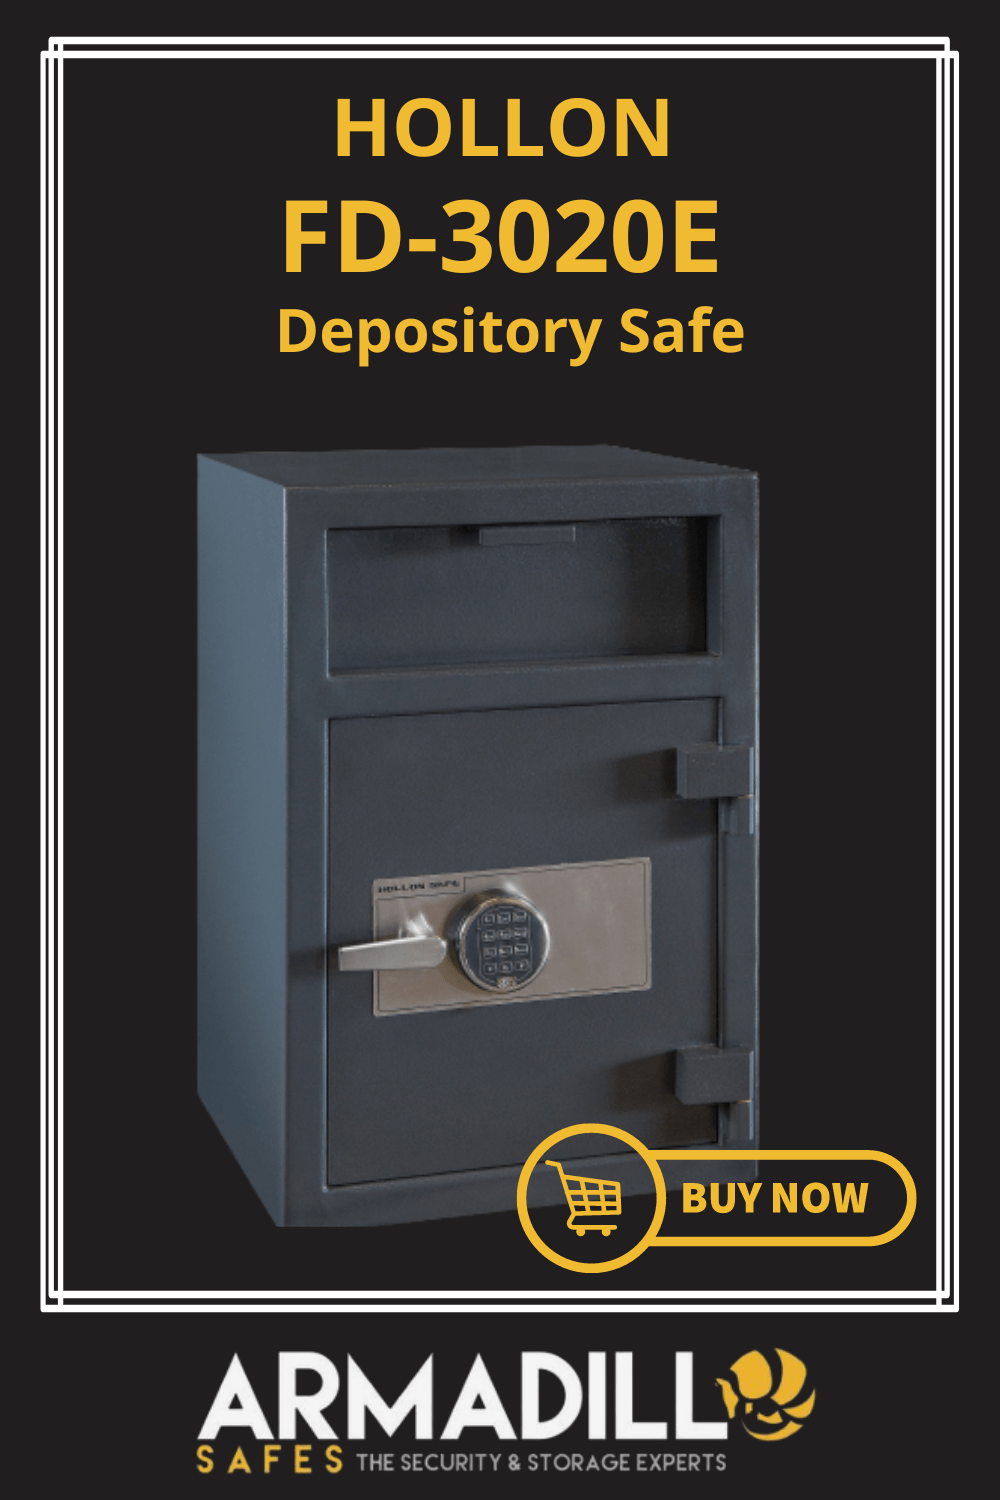 Hollon FD-3020E Depository Safe Armadillo Safe and Vault